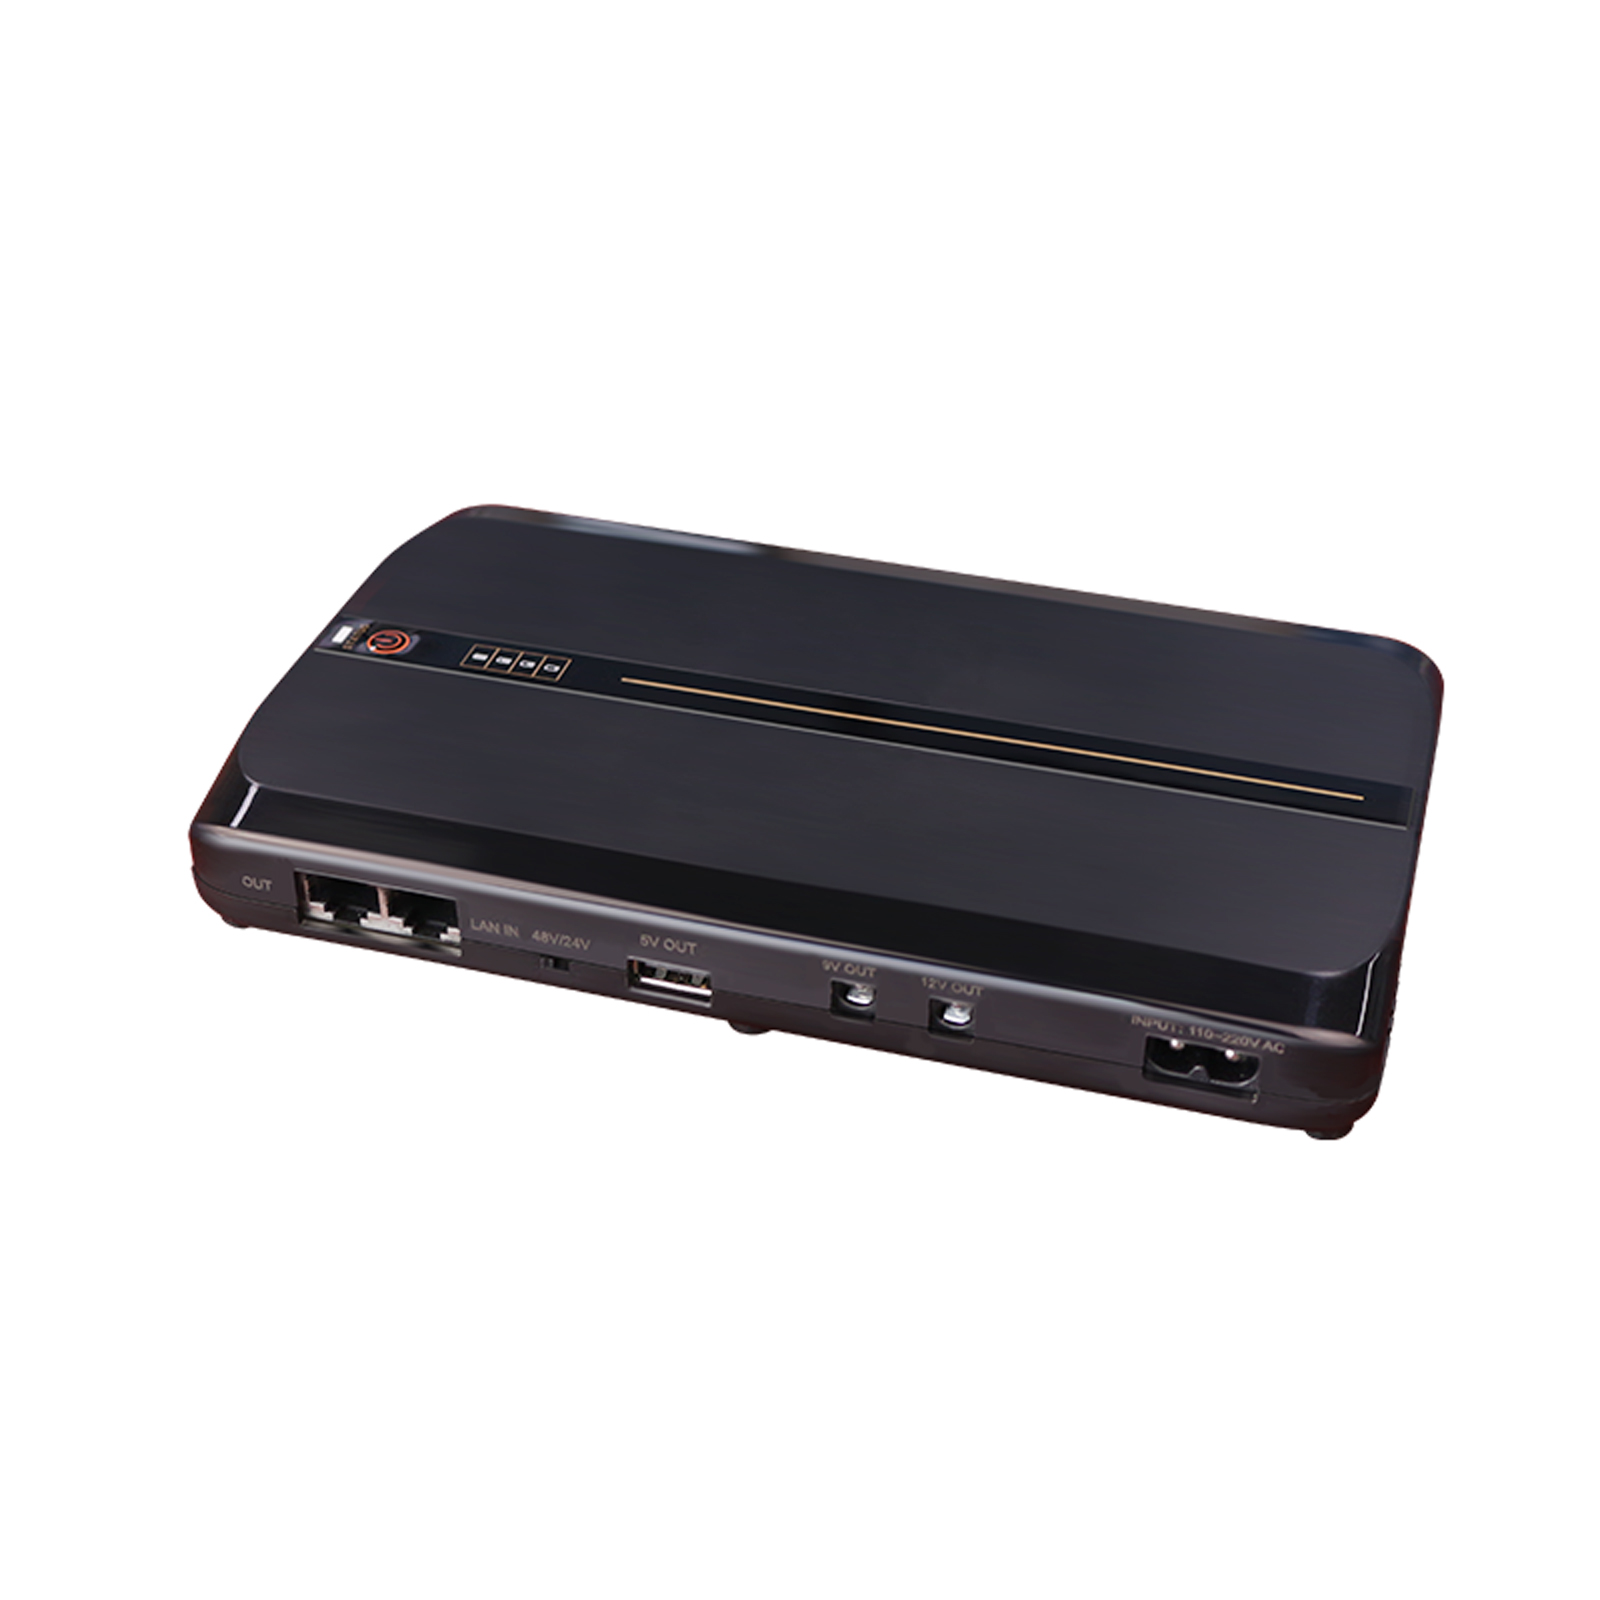 Mini Portable UPS Router 5V 9V 12V Uninterruptible Power Supply for WiFi,  Router Large Capacity Backup